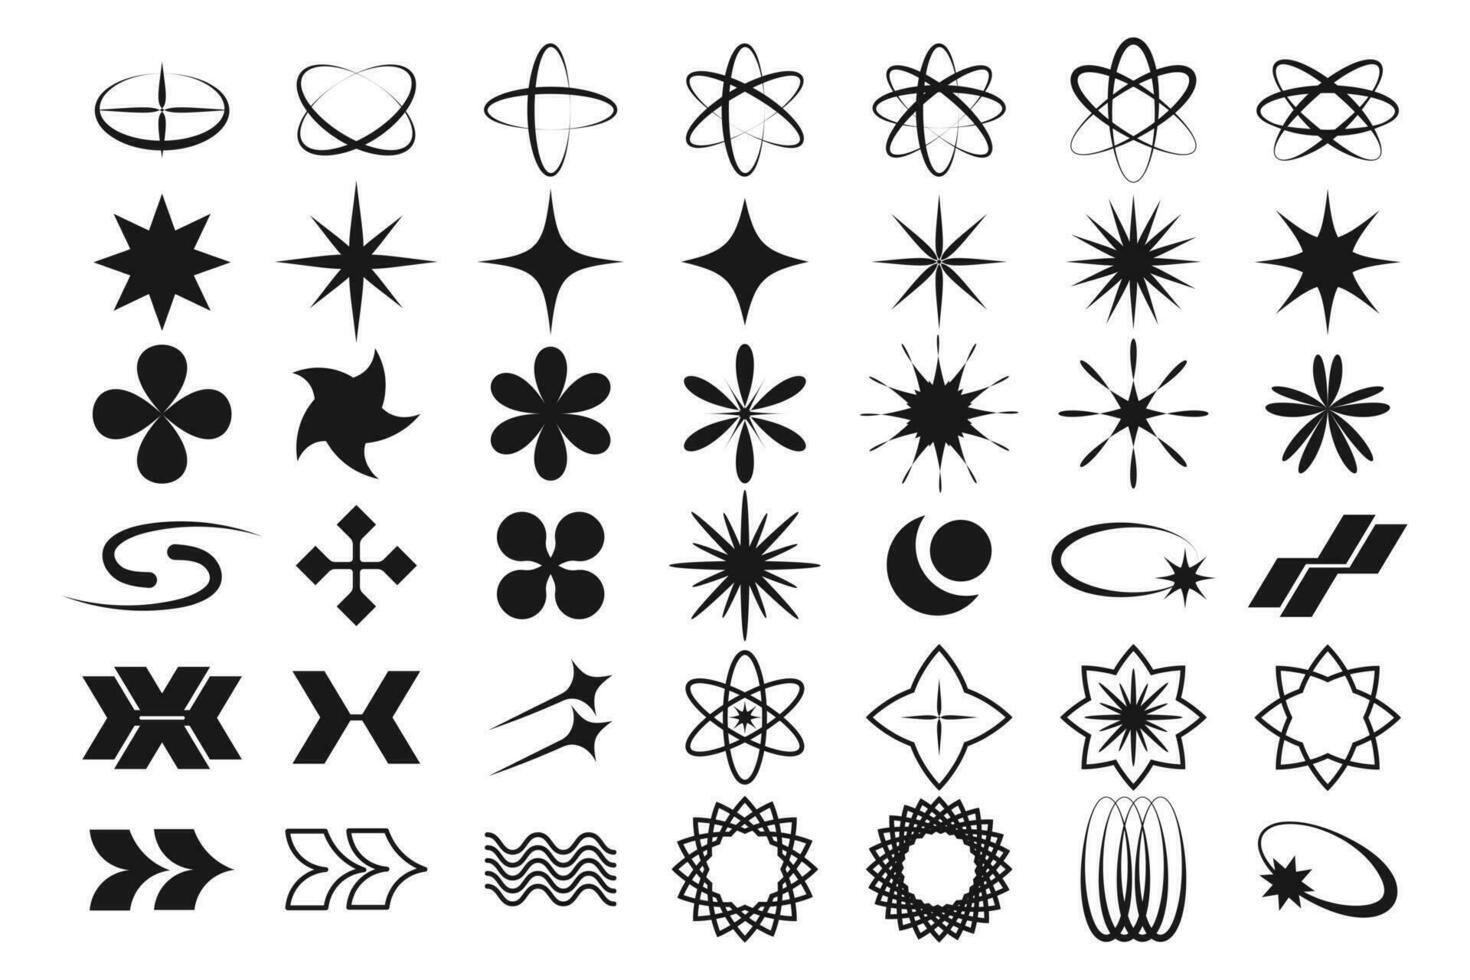 y2k symbool retrofuturisme set, ontwerp elementen voor logo Sjablonen in modern minimalistische stijl. retro sterren pictogrammen en grafisch elementen voor affiches. vector